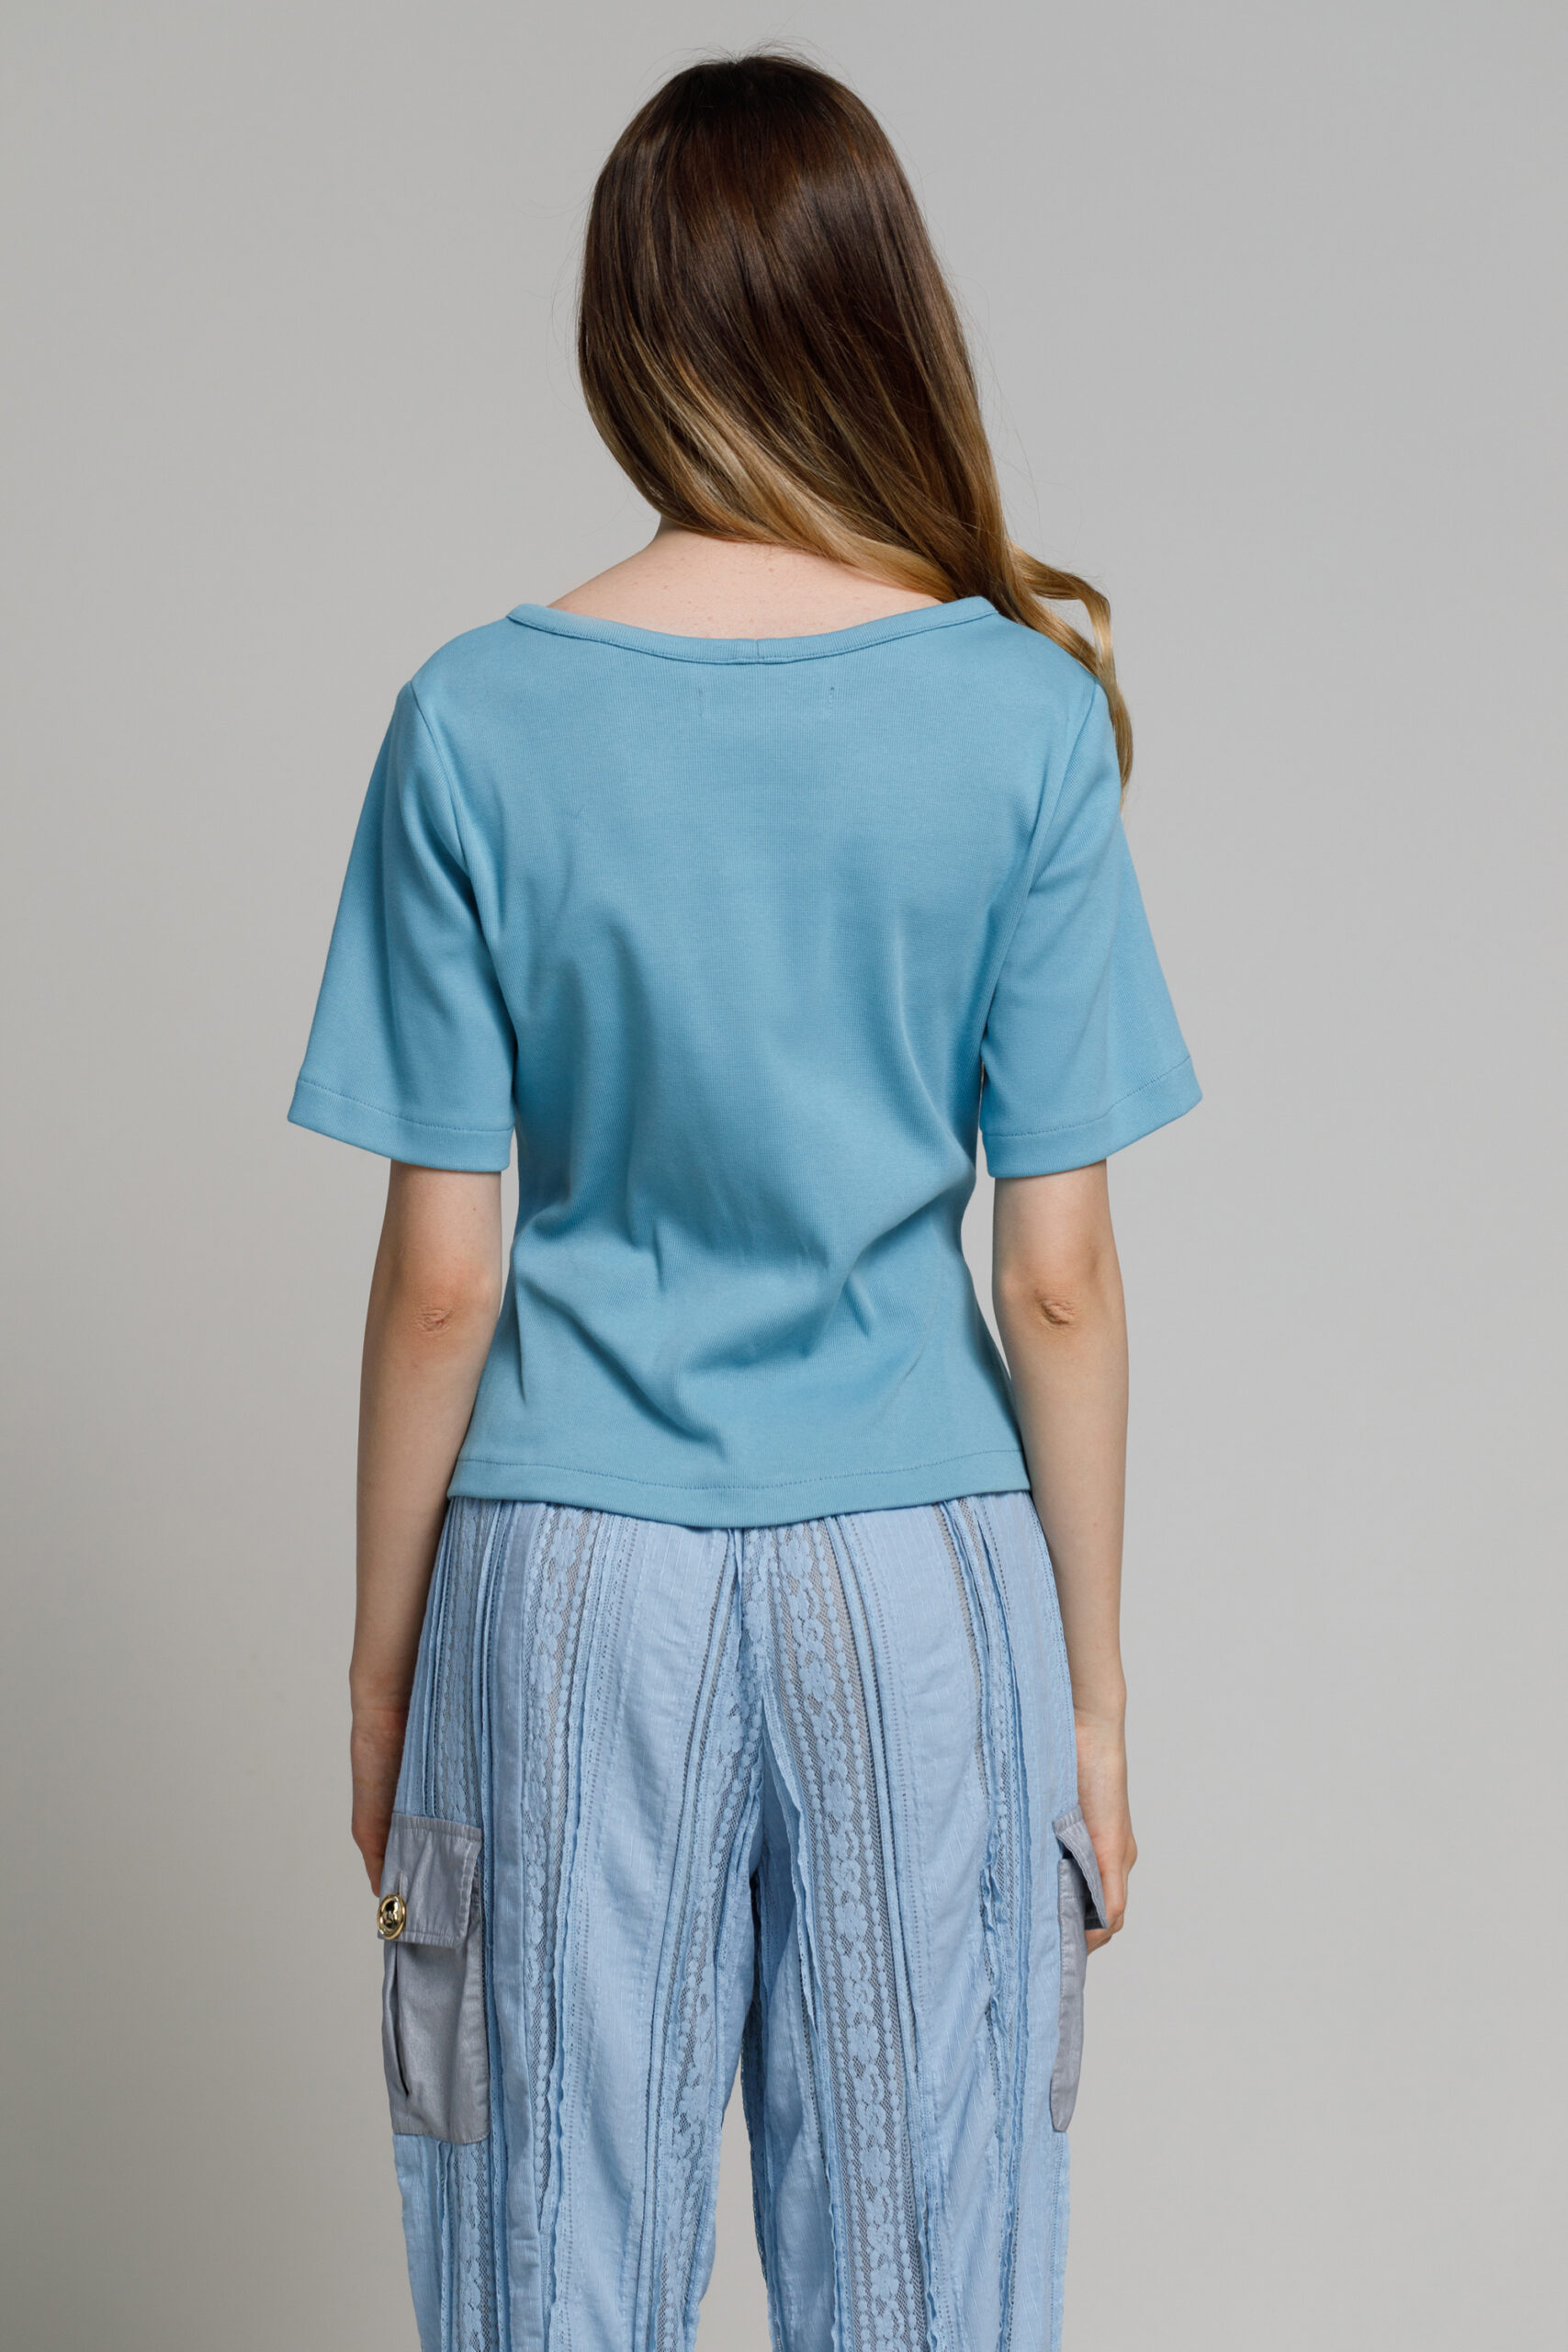 CHIARA blue blouse. Natural fabrics, original design, handmade embroidery